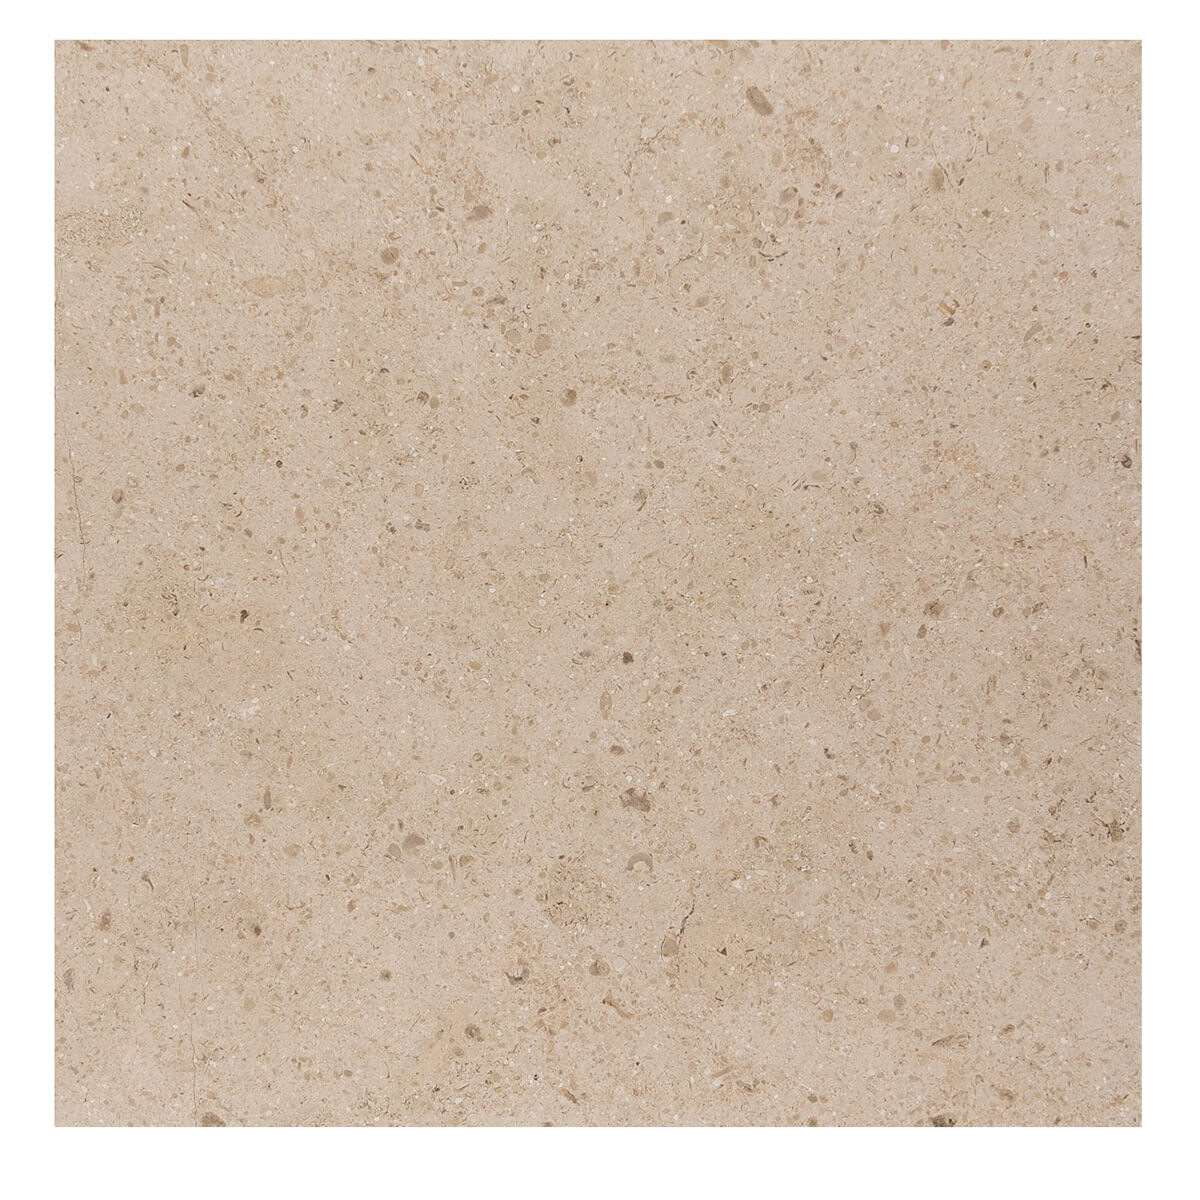 haussmann fonjone gascogne beige limestone square natural stone field tile 12x12 honed